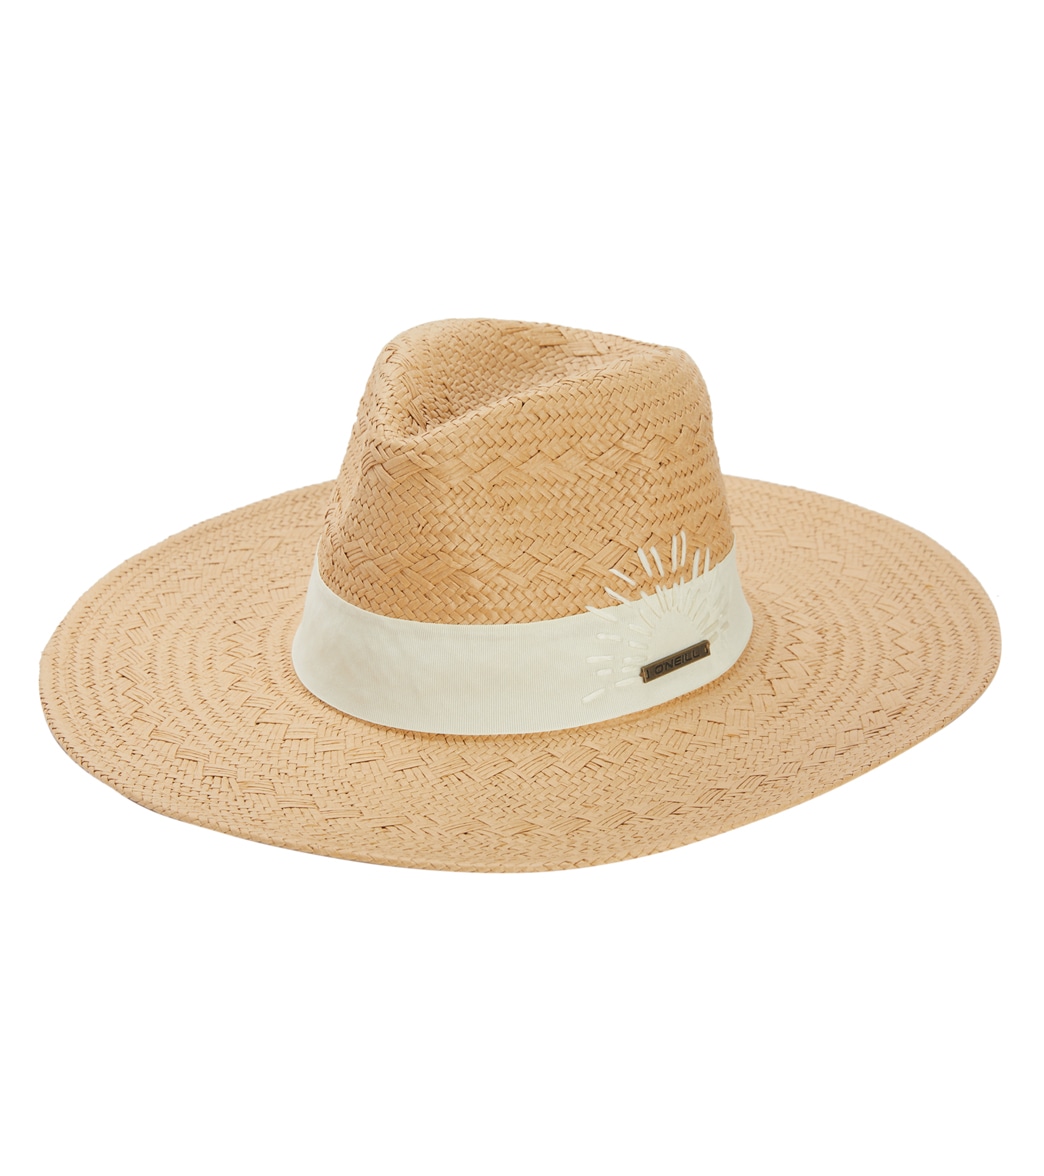 O'neill Ballena Fedora Hat - Natural One Size - Swimoutlet.com